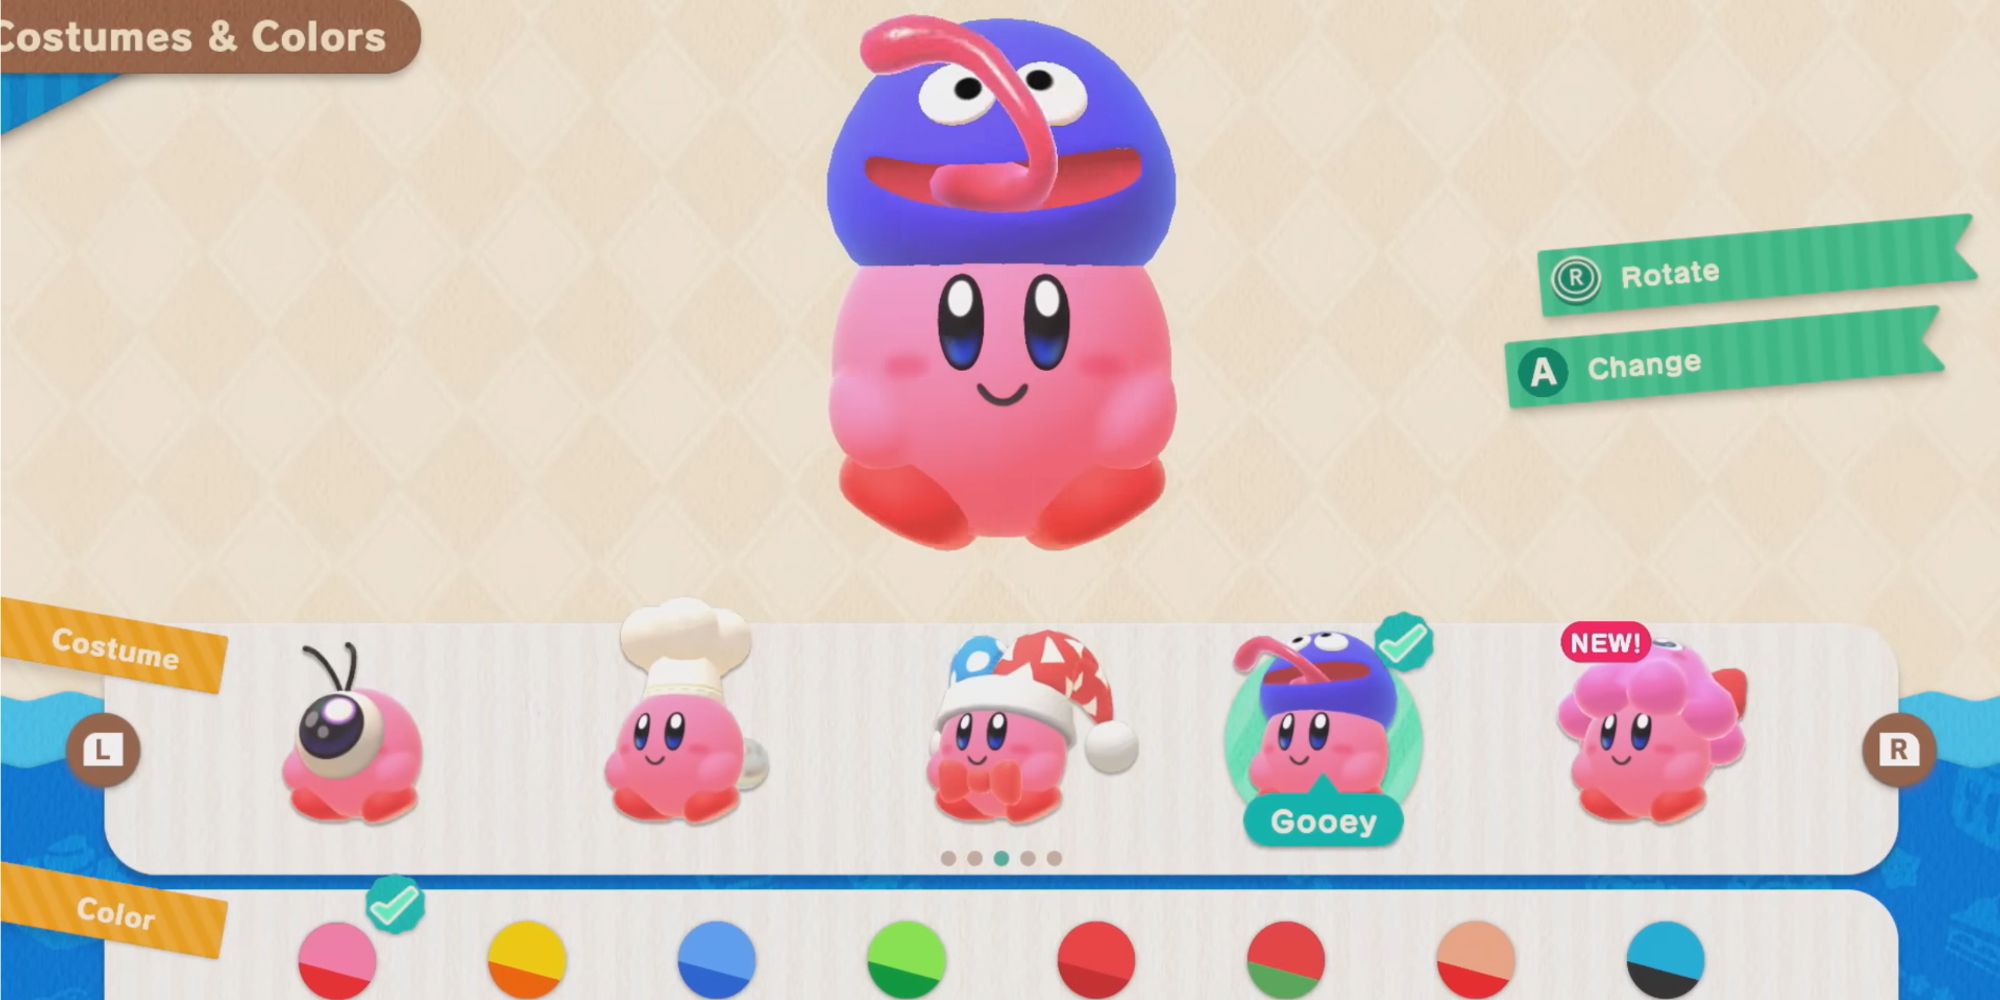 Kirbys Dream Buffet Gooey Costume